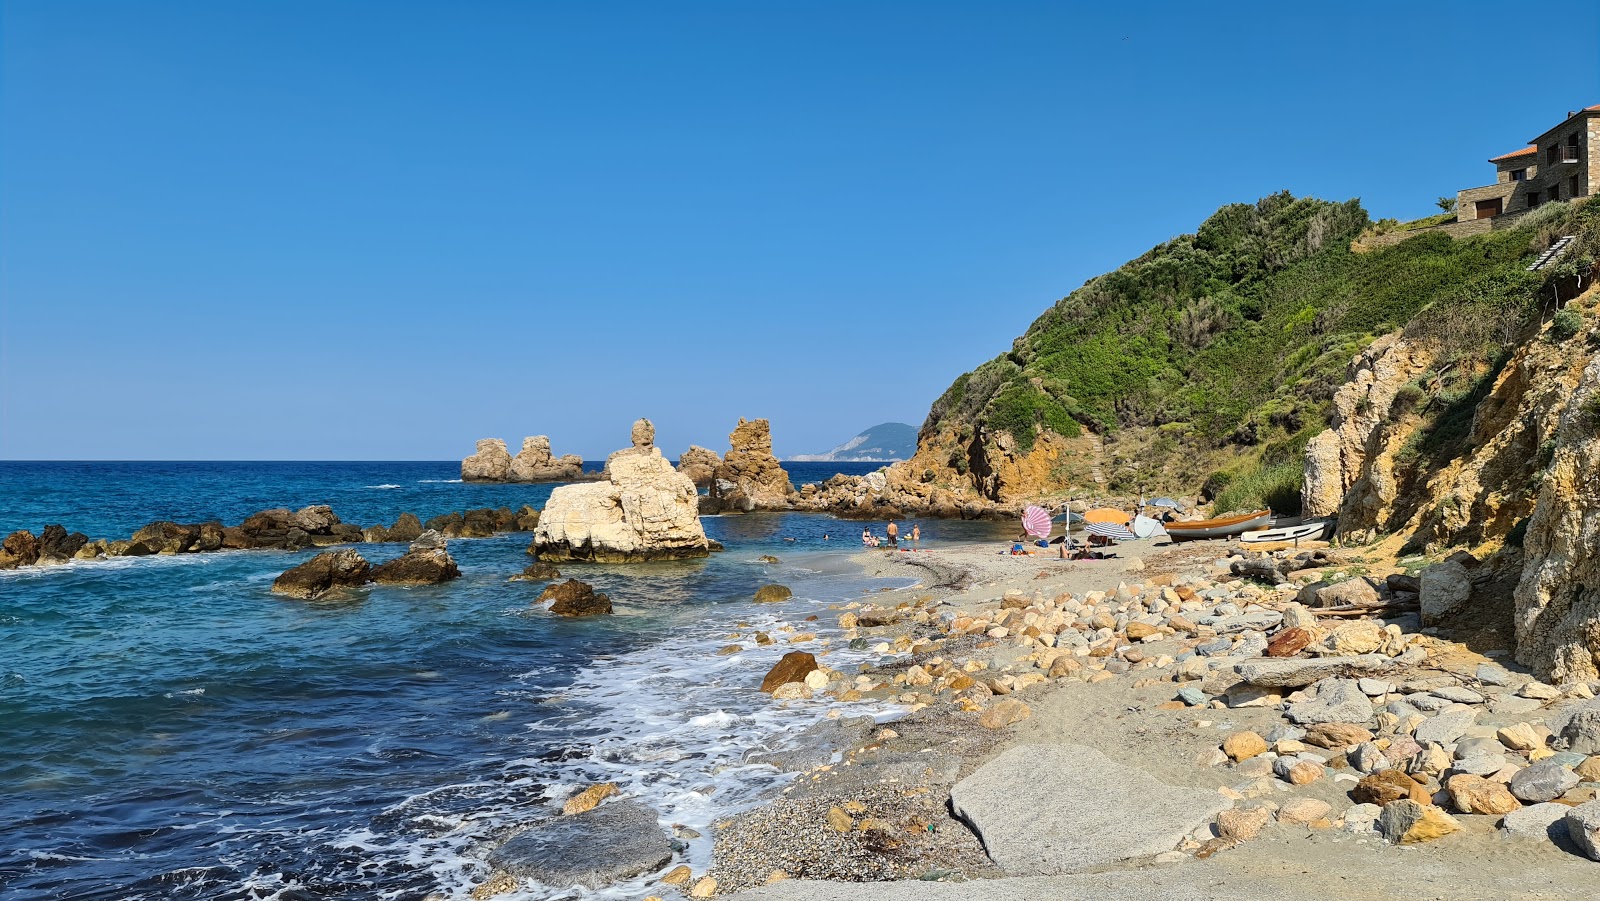 Foto di Mouritas beach ubicato in zona naturale